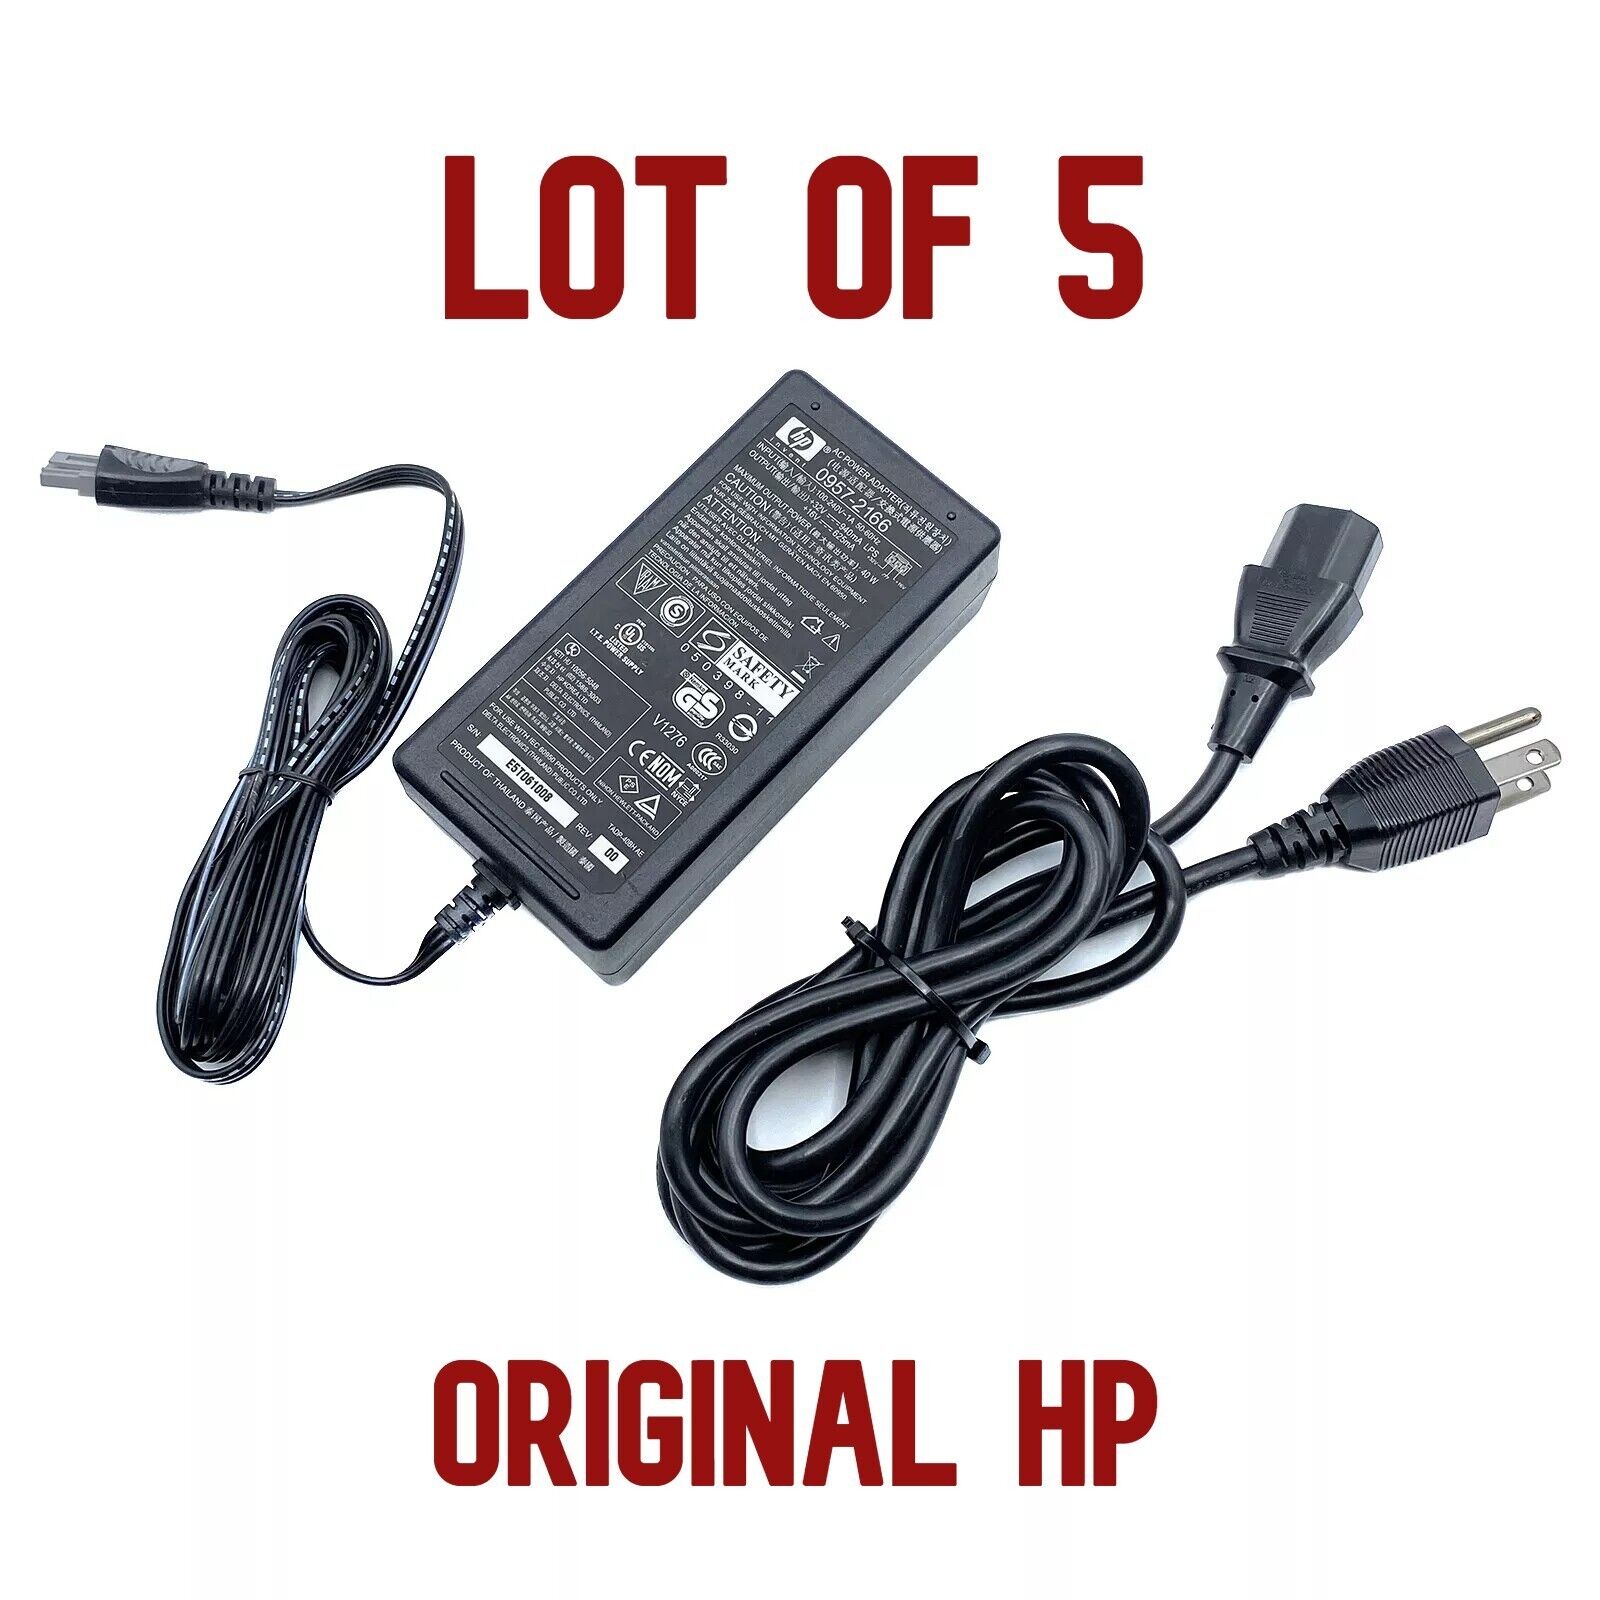 Lot of 5 HP AC Adapter for Photosmart PSC Printer 1300 1400 1500 1600 Series OEM